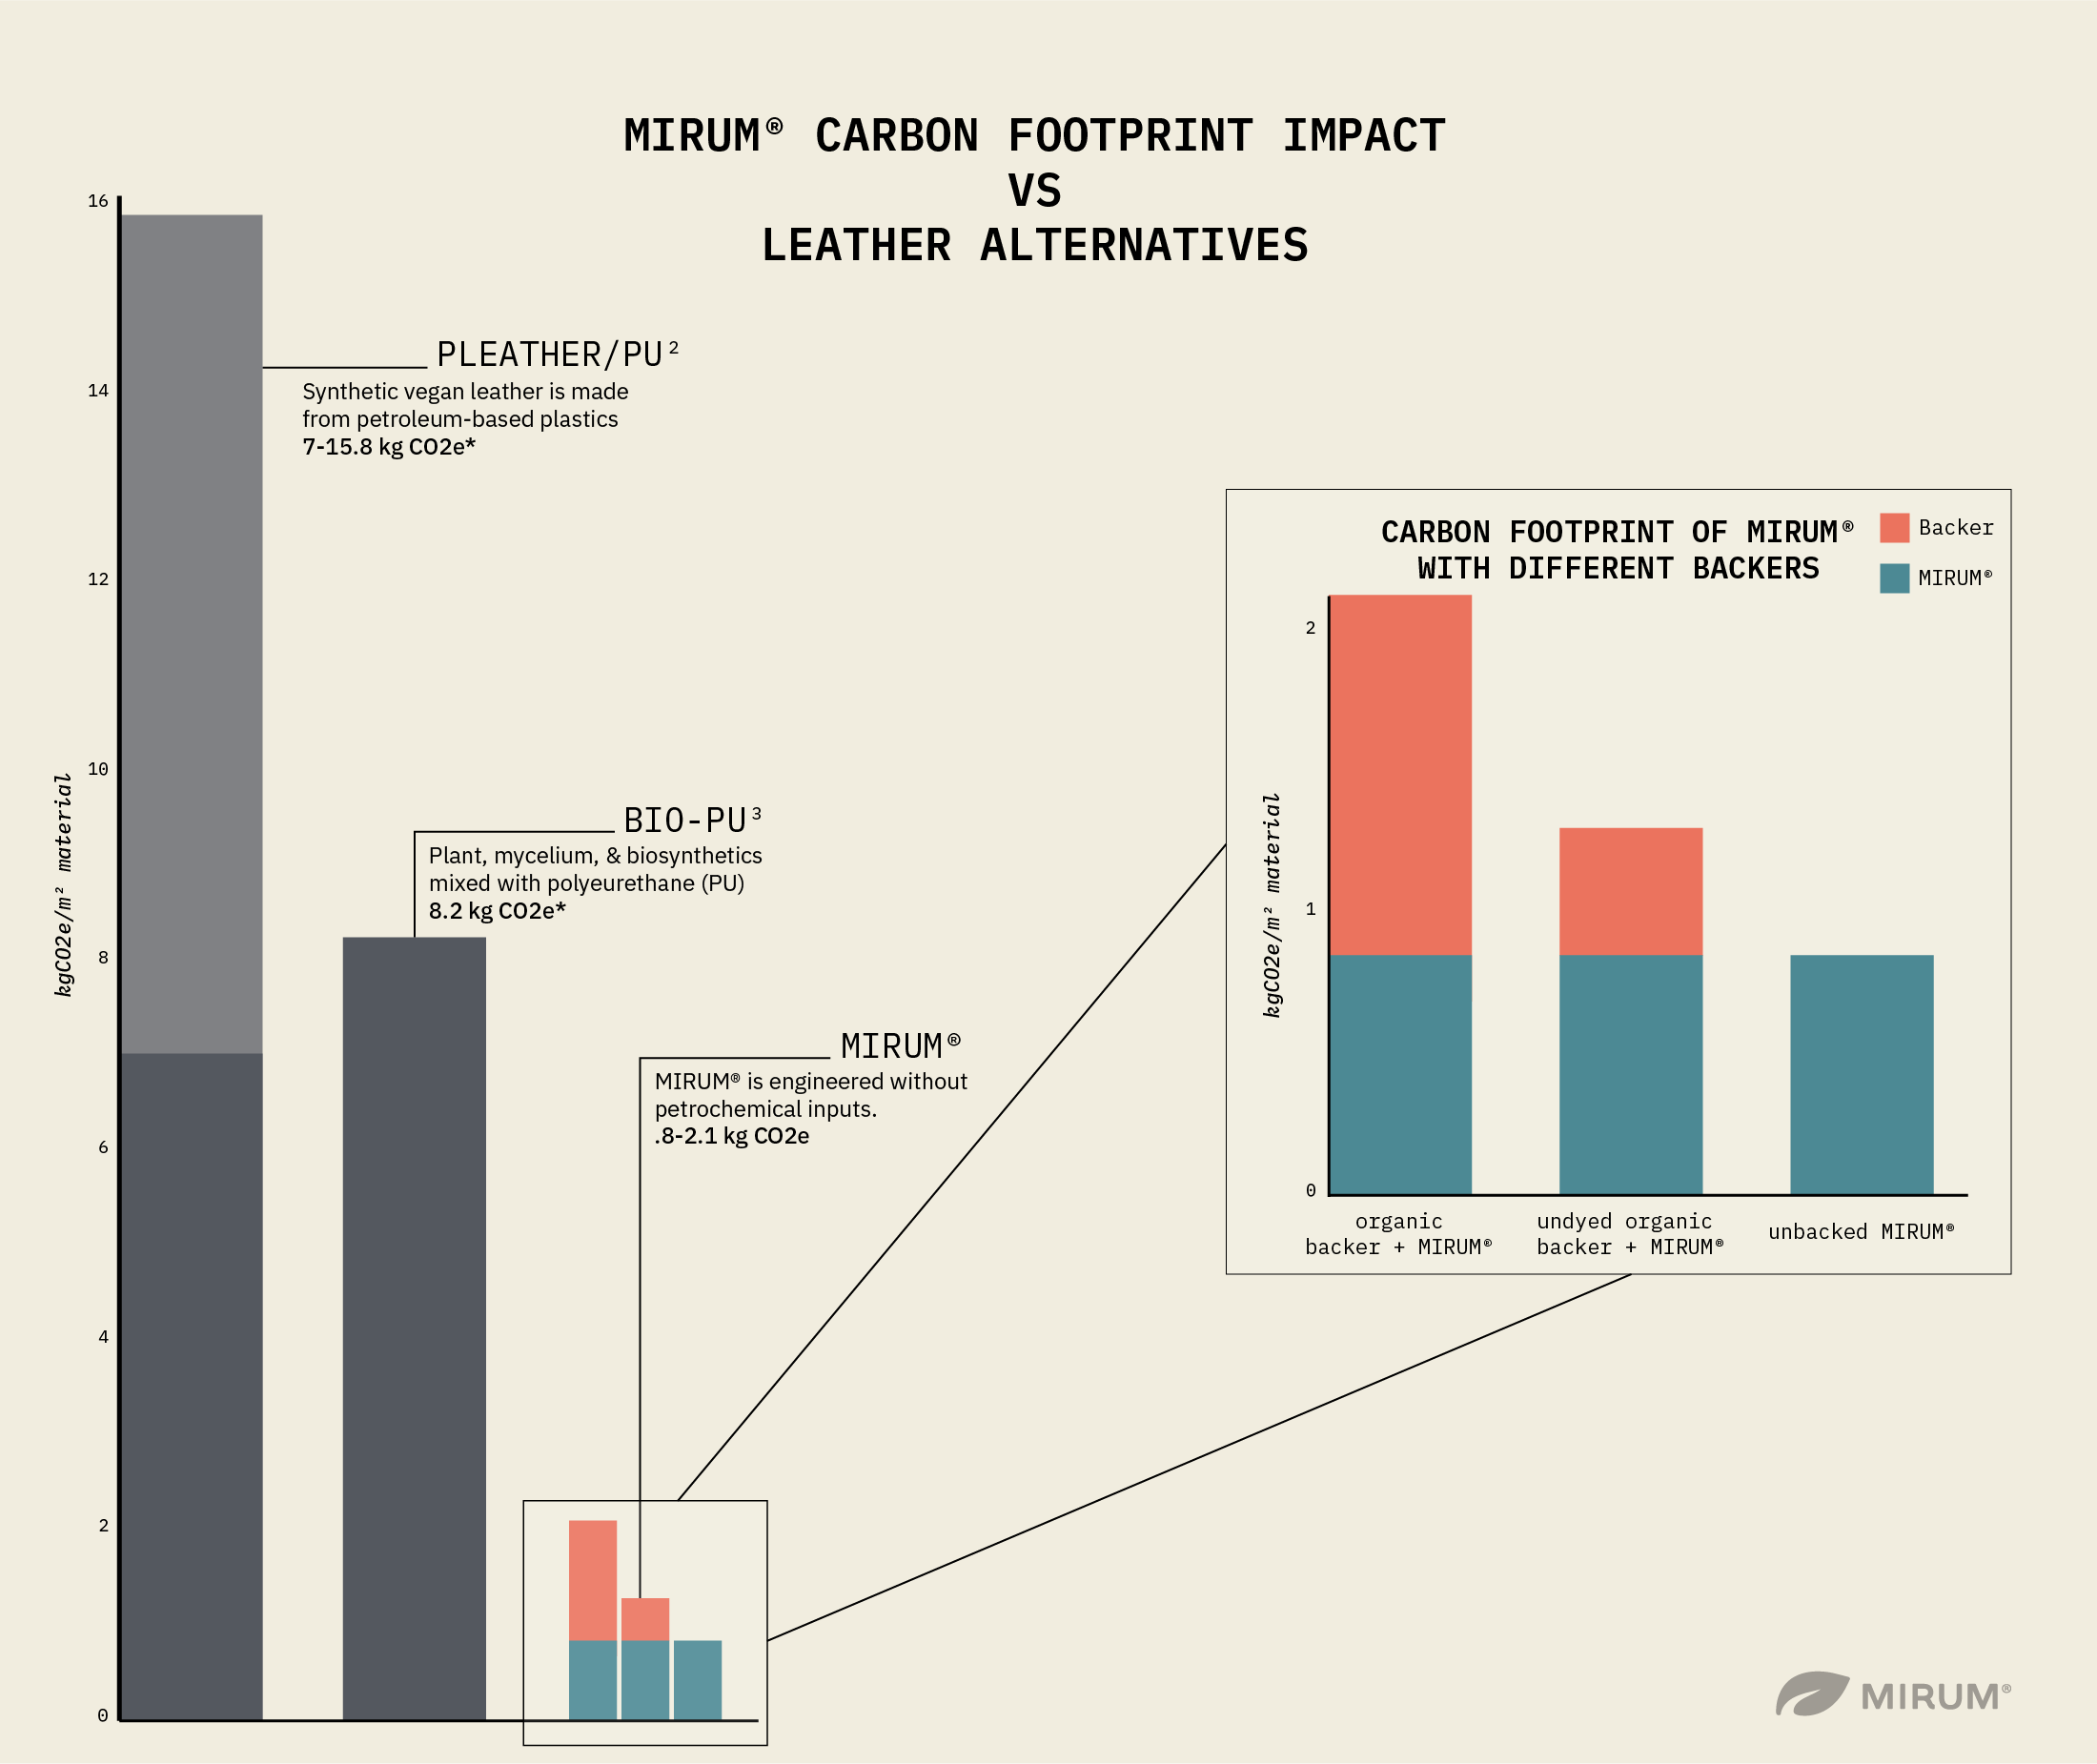 MIRUM versus pleather carbon footprint